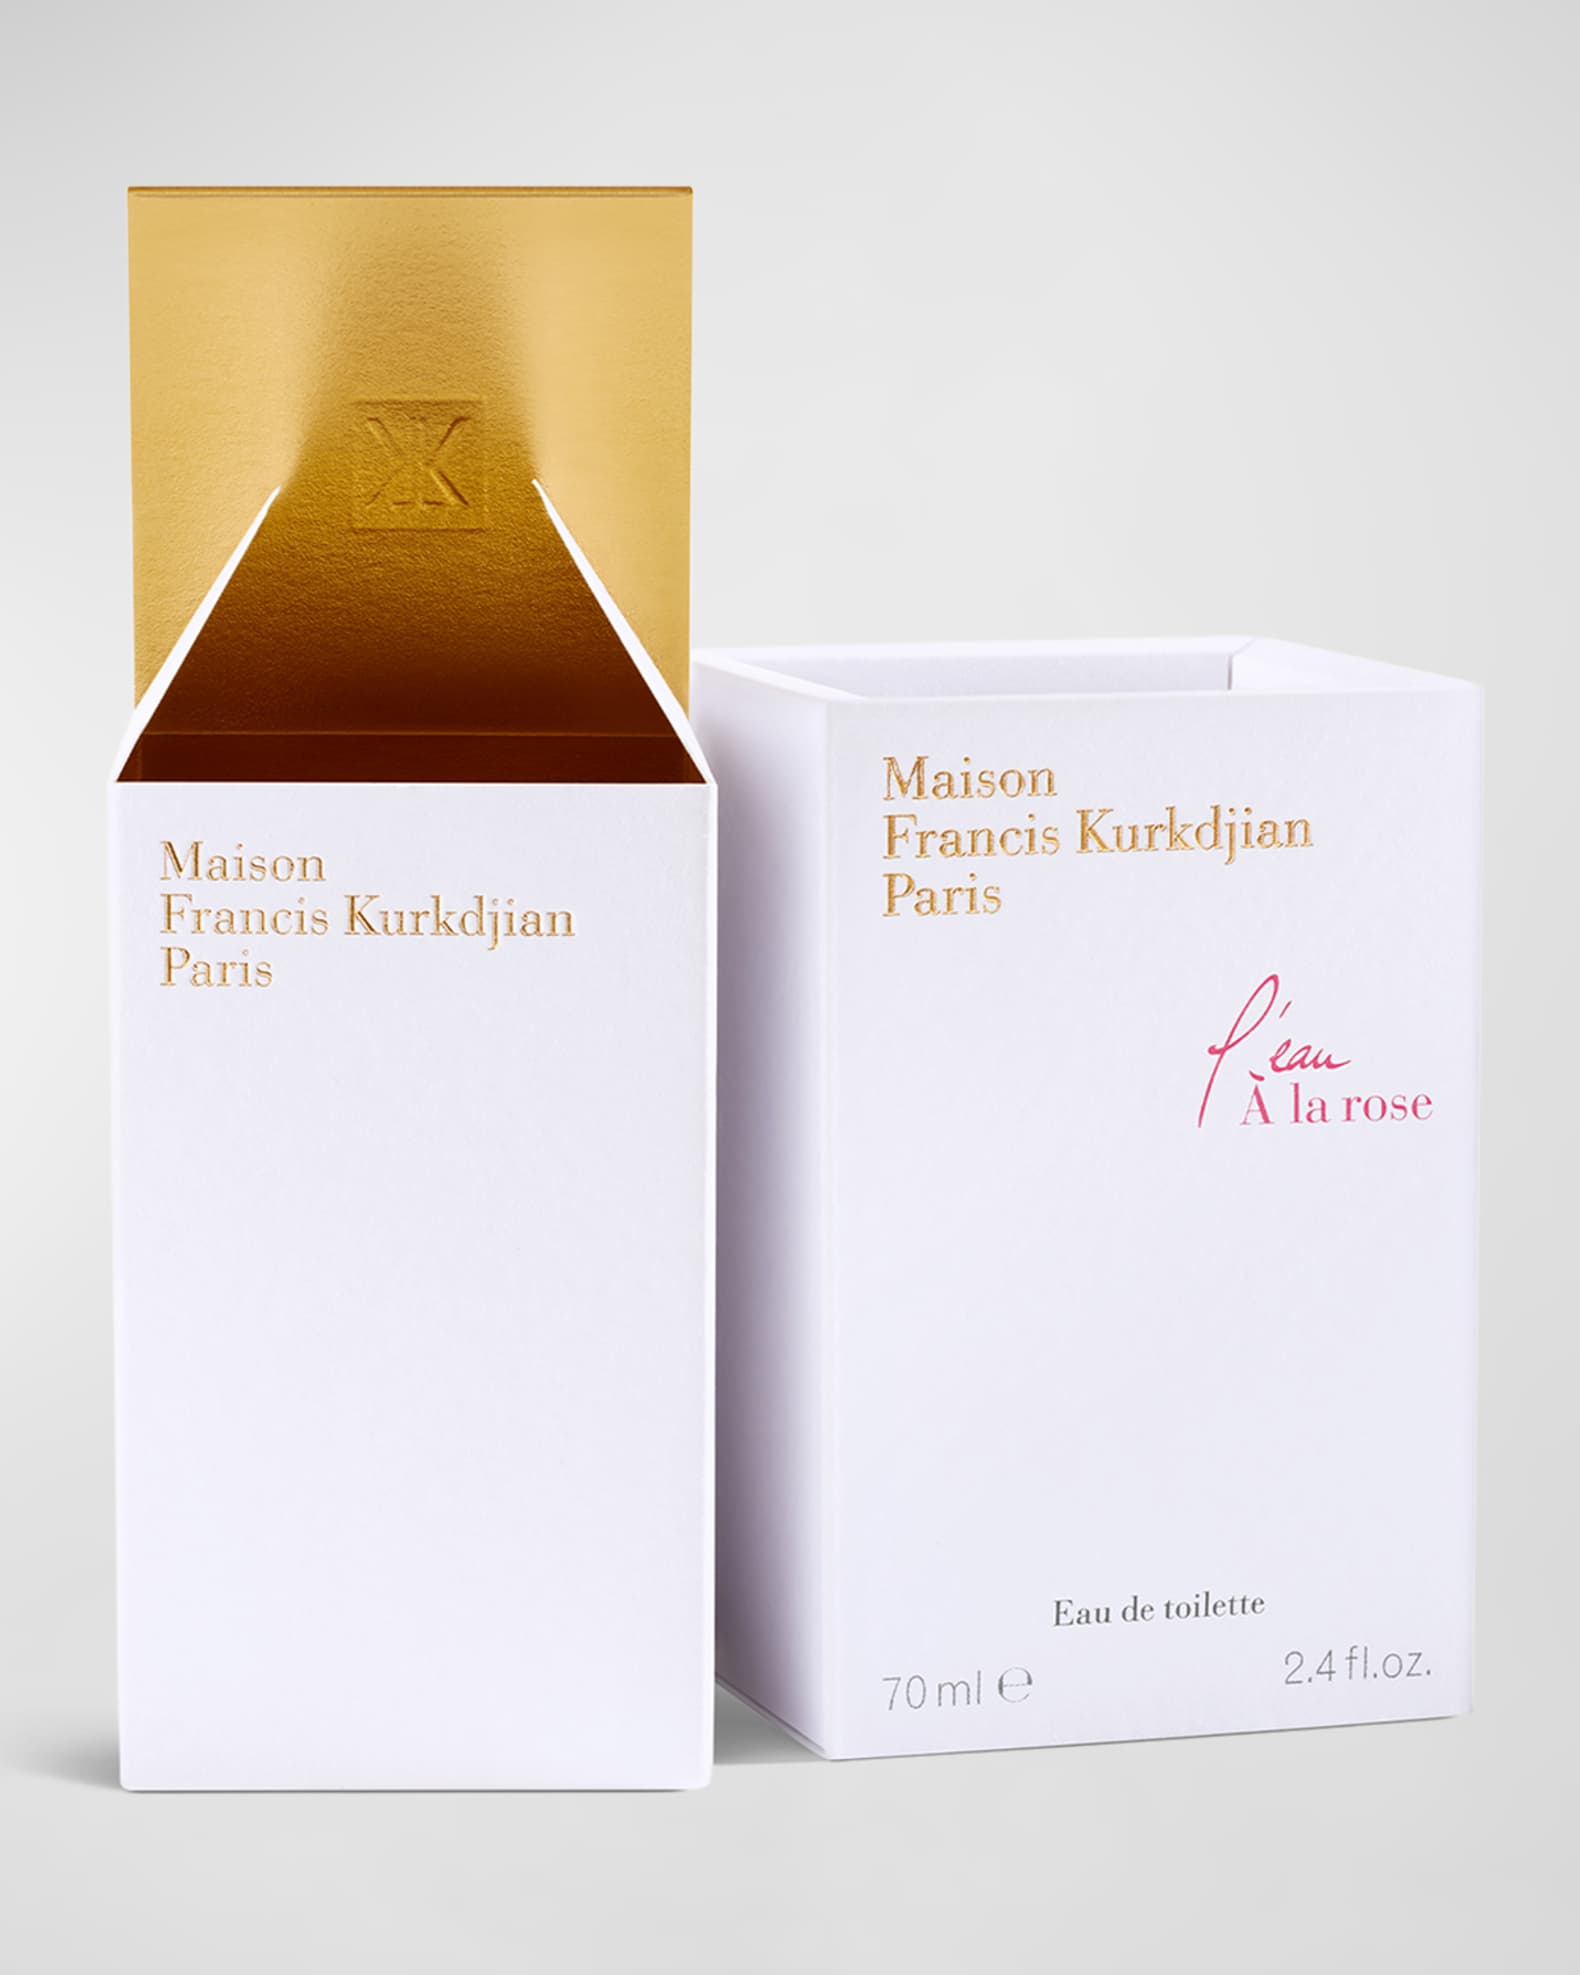 L'eau À la rose - Maison Francis Kurkdjian - Luxferity Magazine